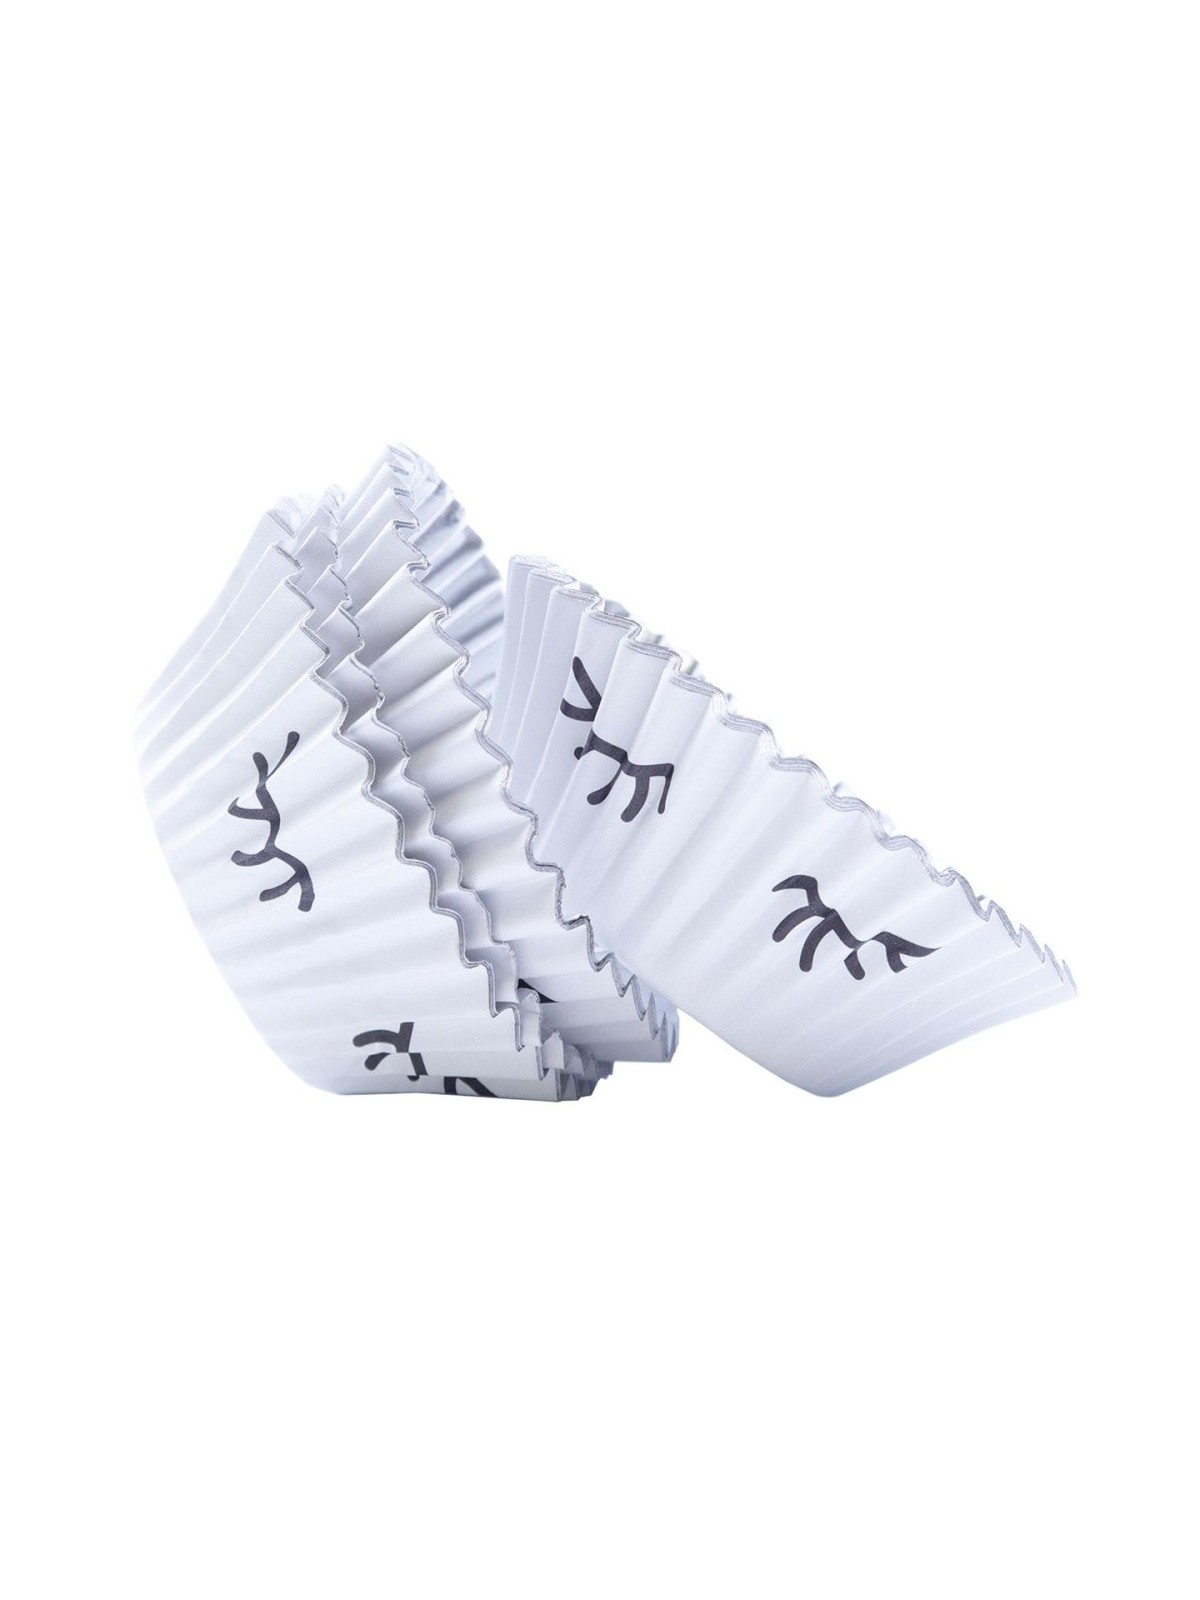 PME Foil Lined Baking cups - white - unicorn eyes - 30 pcs